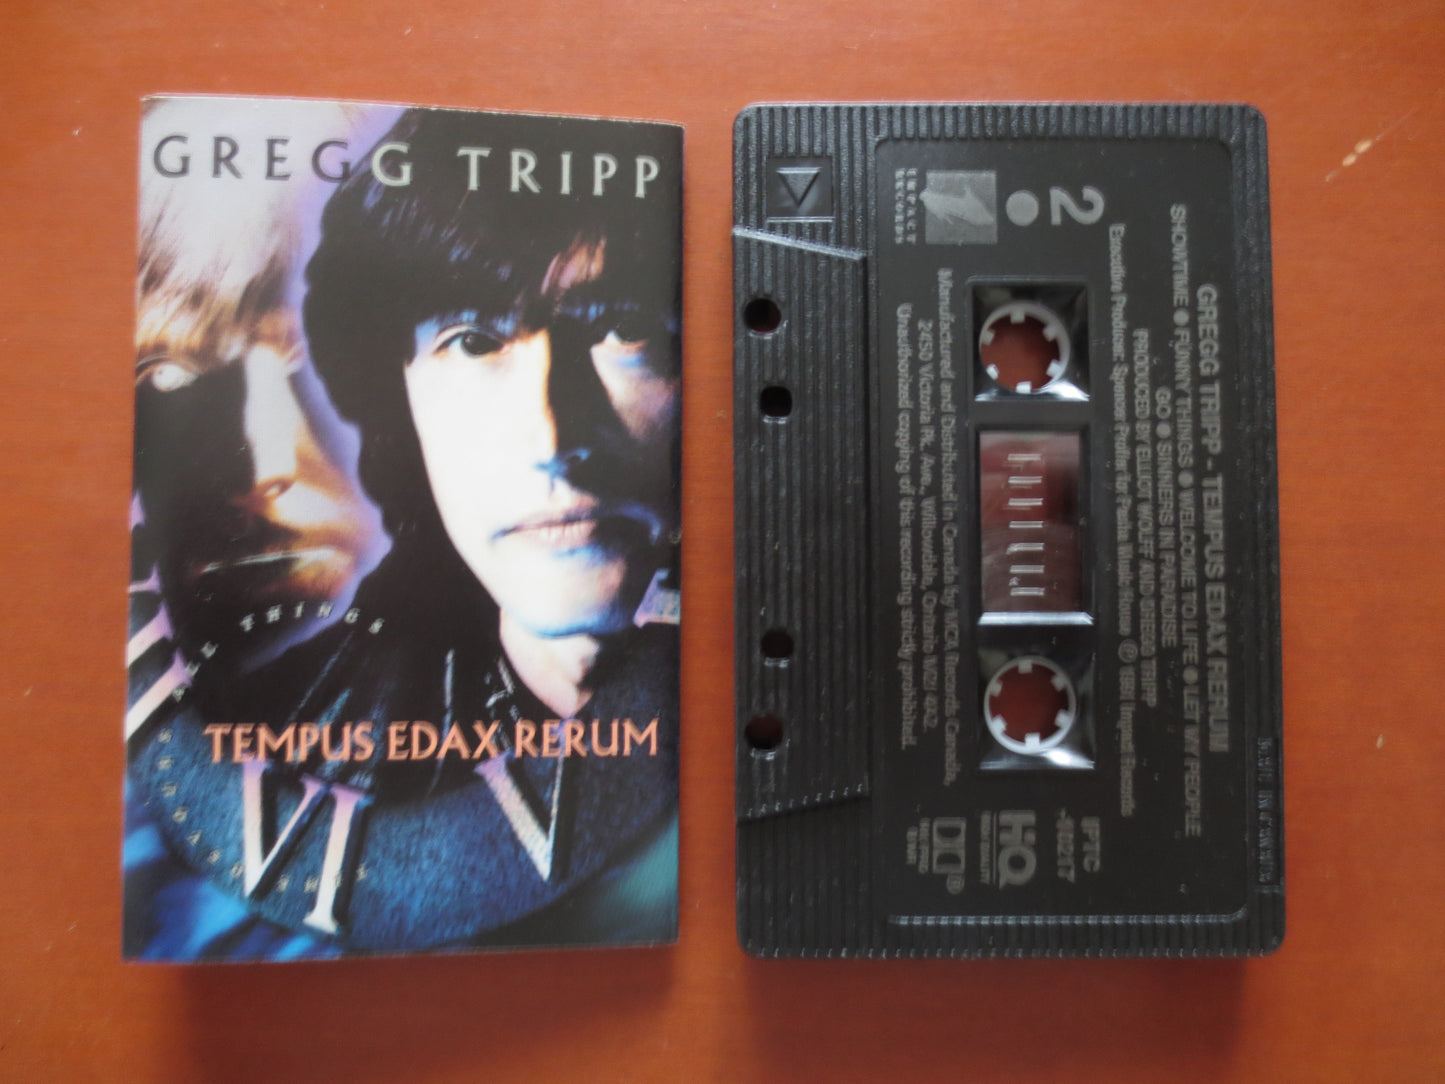 GREGG TRIPP Tape, Tempus Edax Rerum, GREGG Tripp Music, Tape Cassette, Gregg Tripp Cassette, Gregg Tripp Song, 1991 Cassette